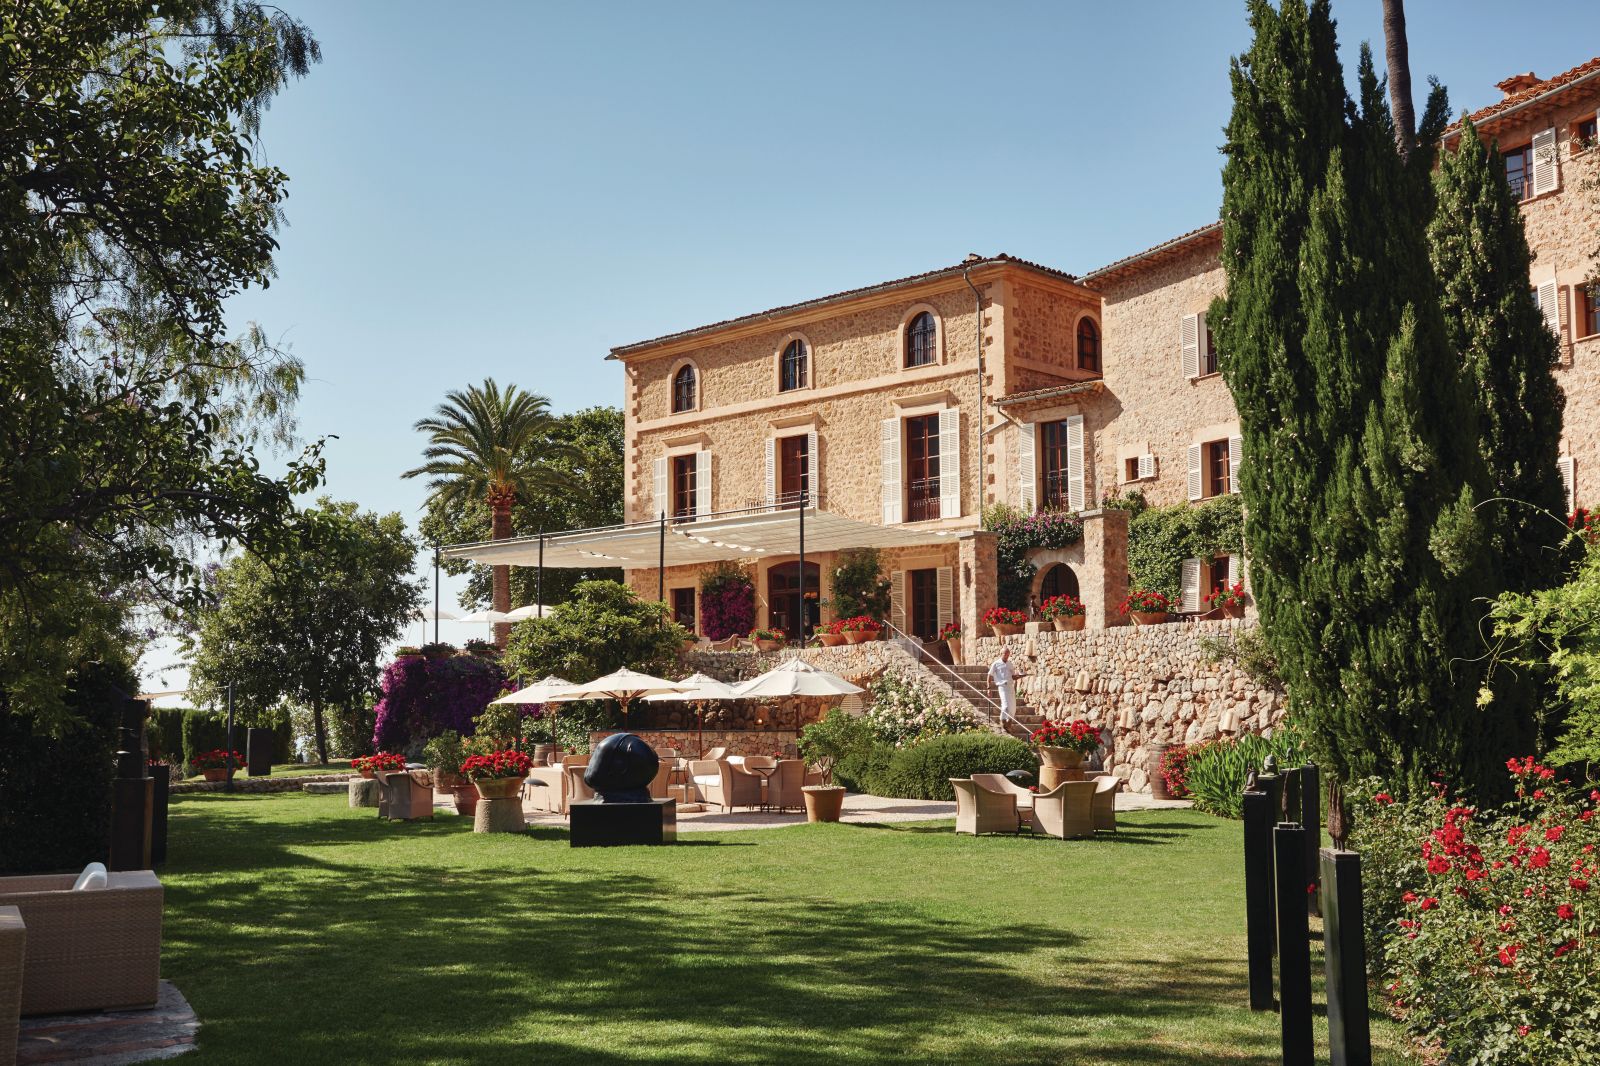 La Residencia, A Belmond Hotel, Mallorca - Deia, Spain